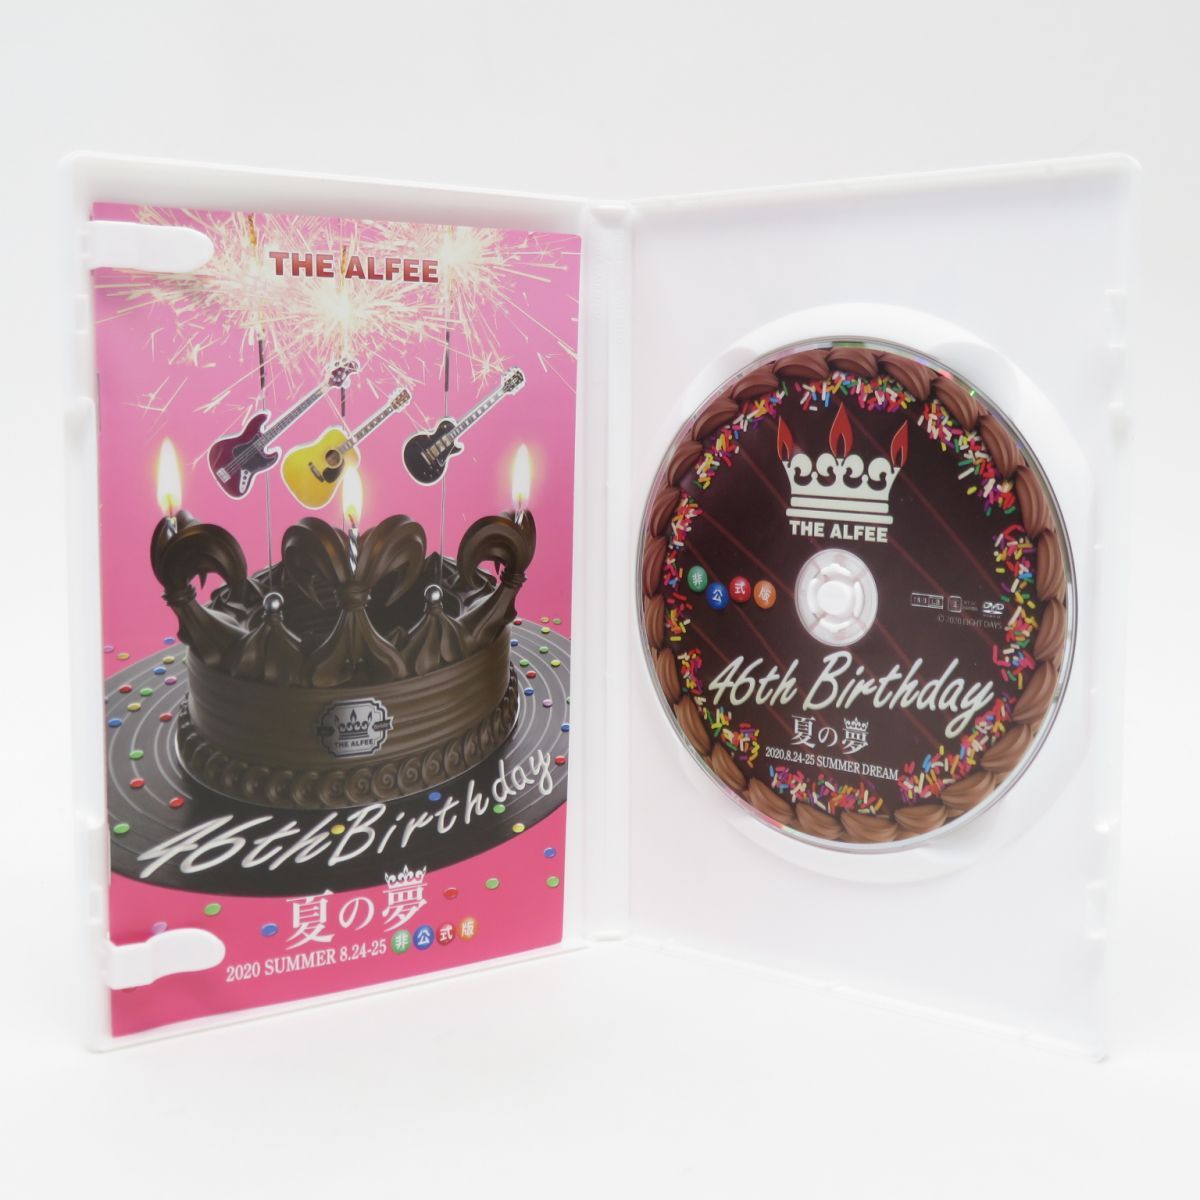 DVD THE ALFEE 夏の夢 2020 SUMMER 8.24-25 DVDパンフレット 非公式版 